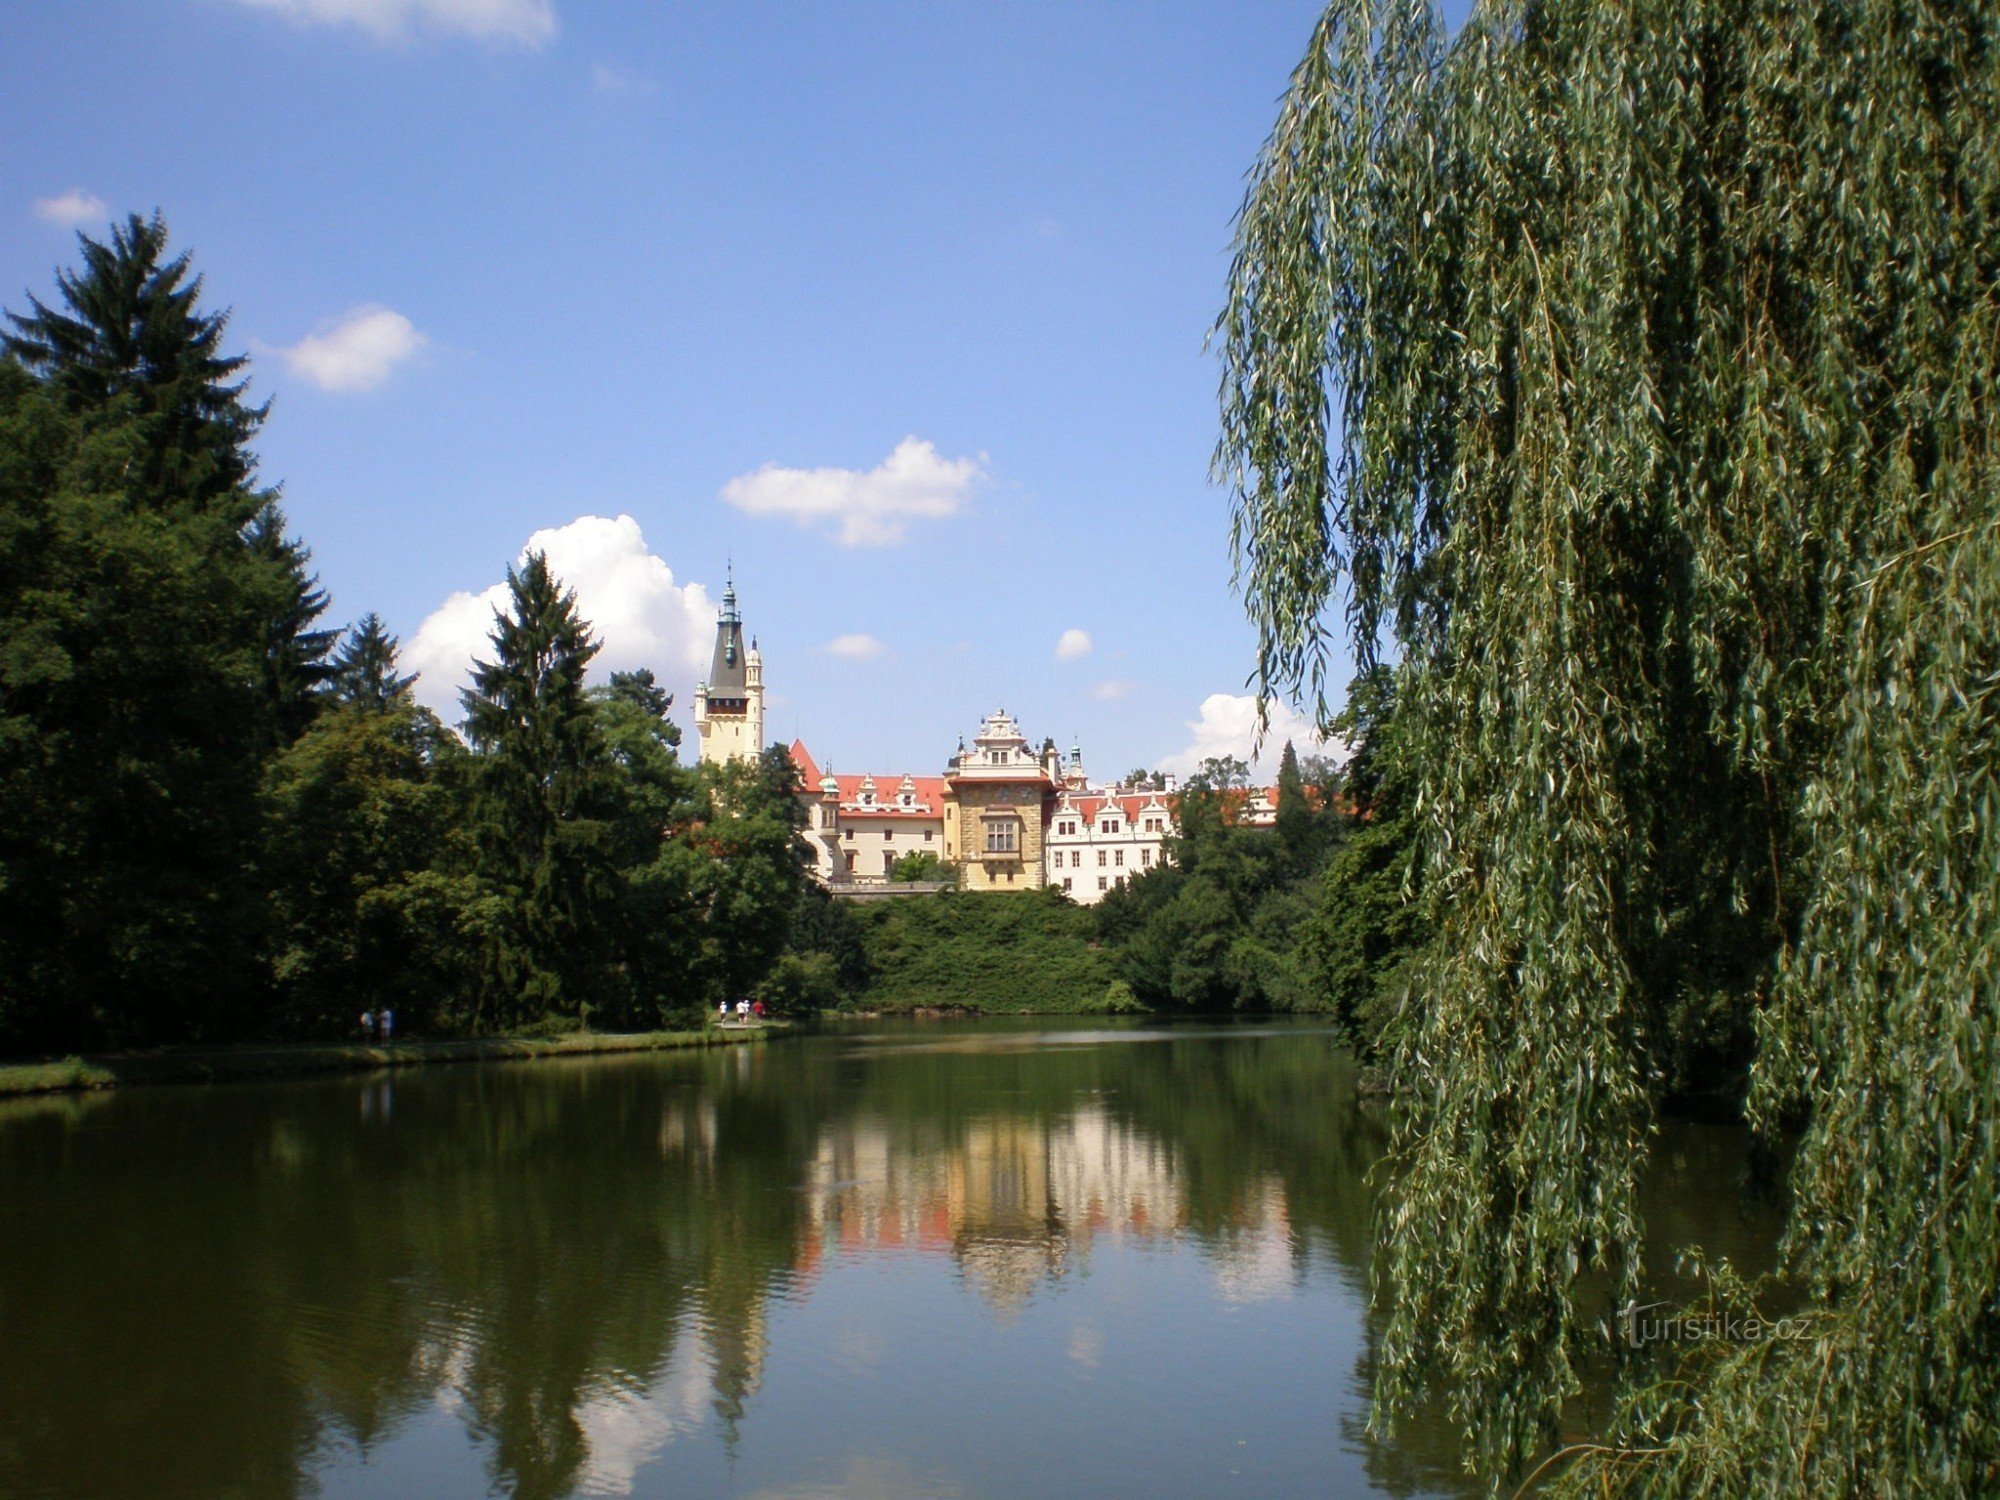 Průhonice - widok na zamek przez staw Podzámecký